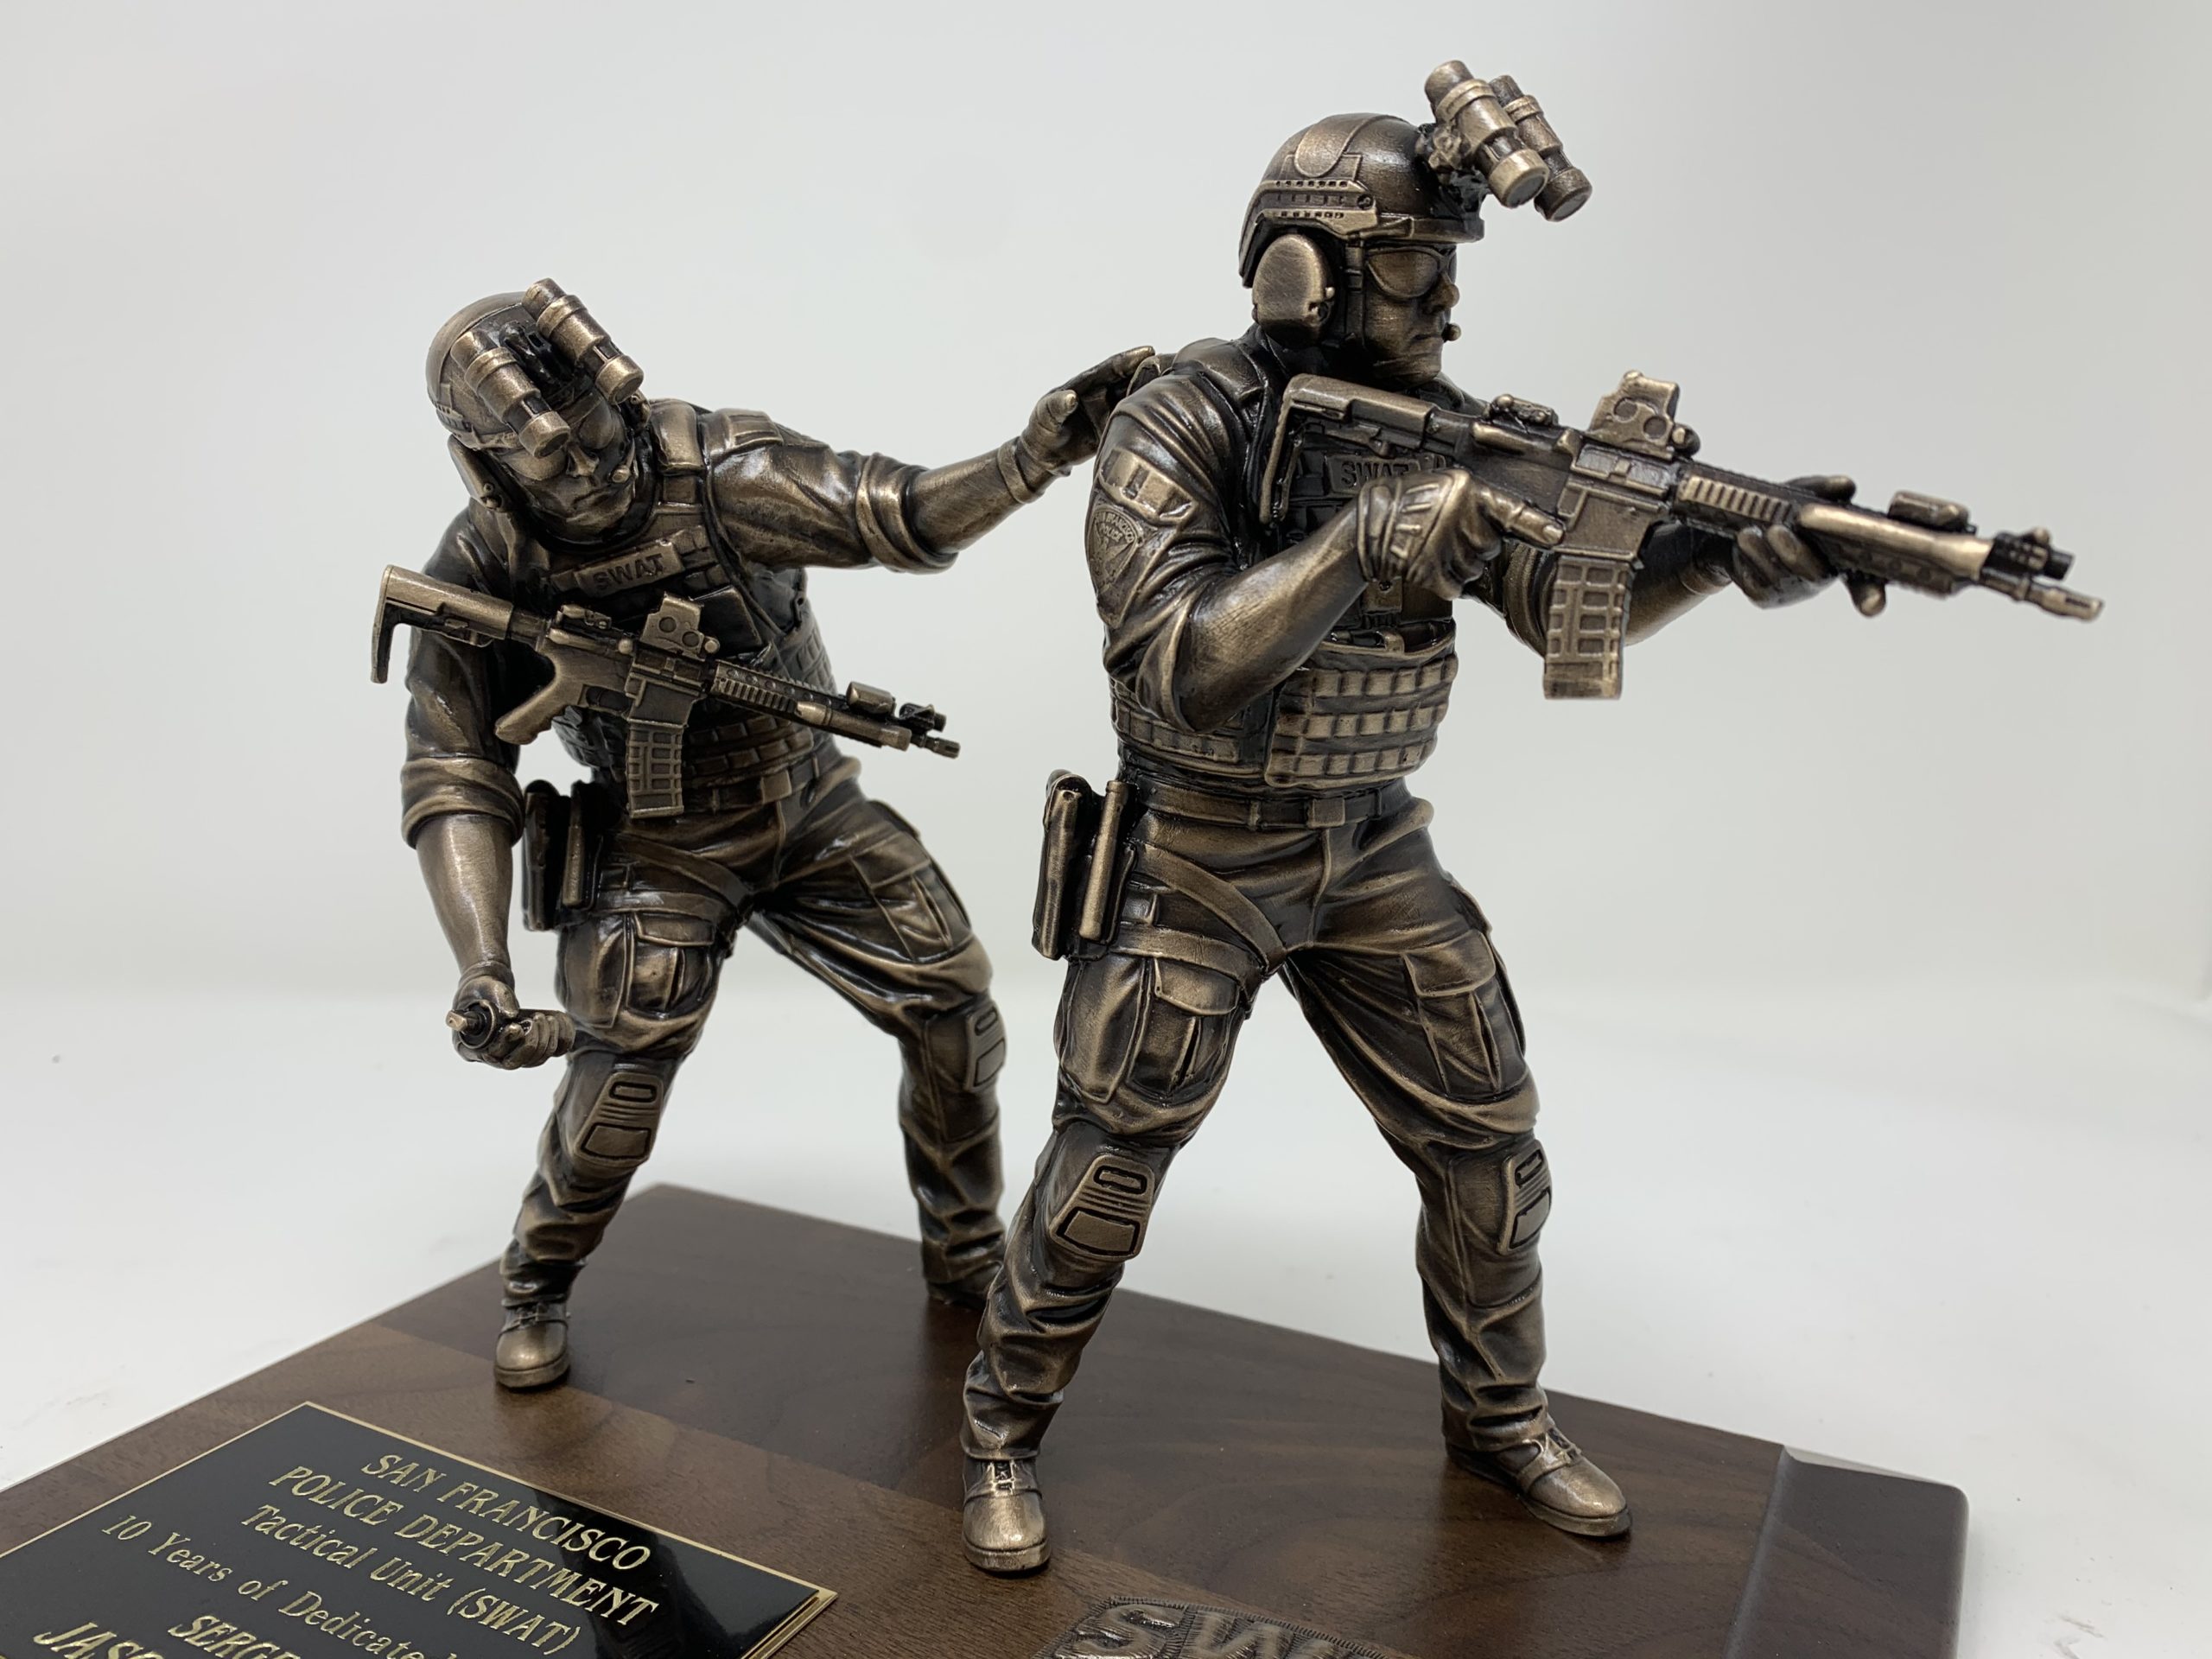 Bronze SWAT entry unit law enforcement retirement and recognition awards, Law Enforcement Tactical team awards